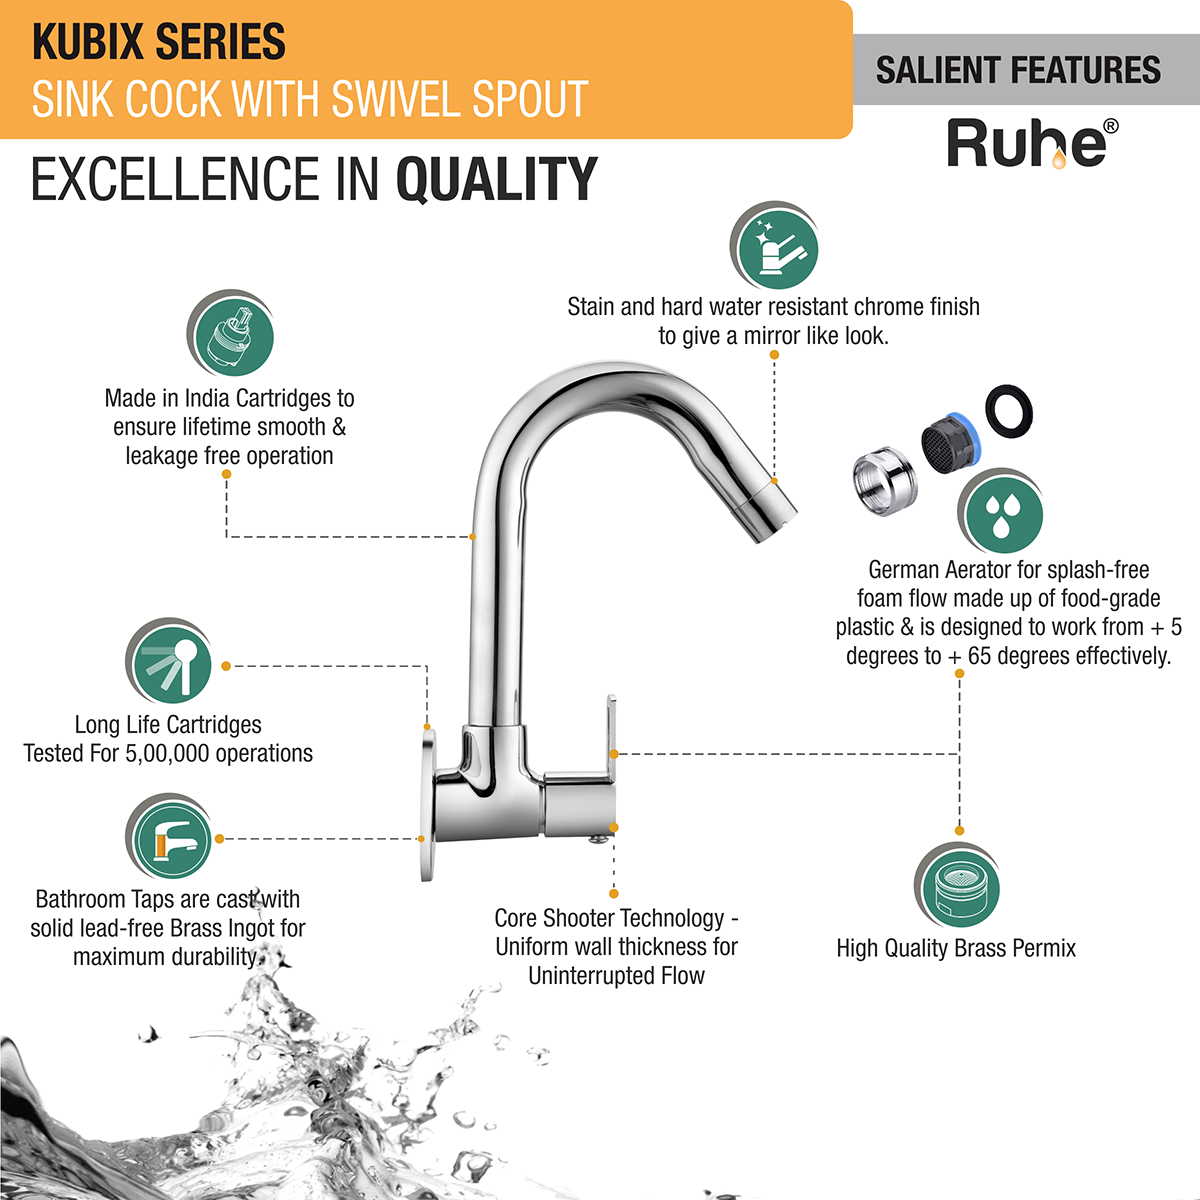 Kubix Sink Tap With Swivel Spout Faucet features